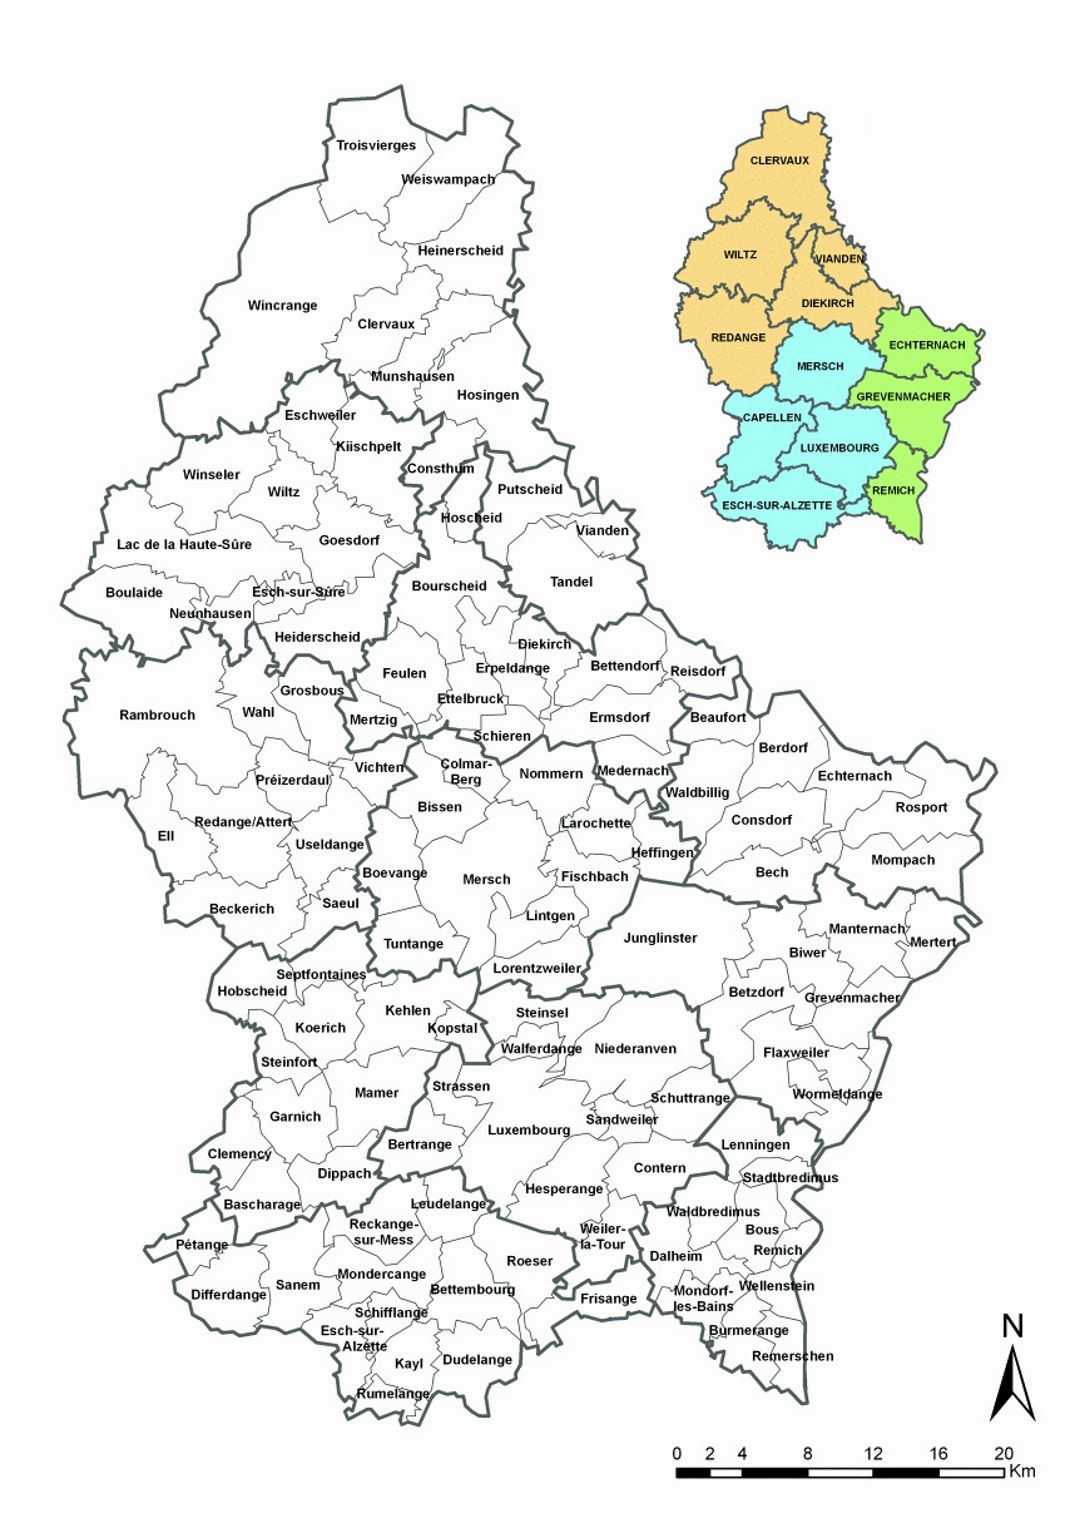 Detallado mapa circuito administrativo de Luxemburgo